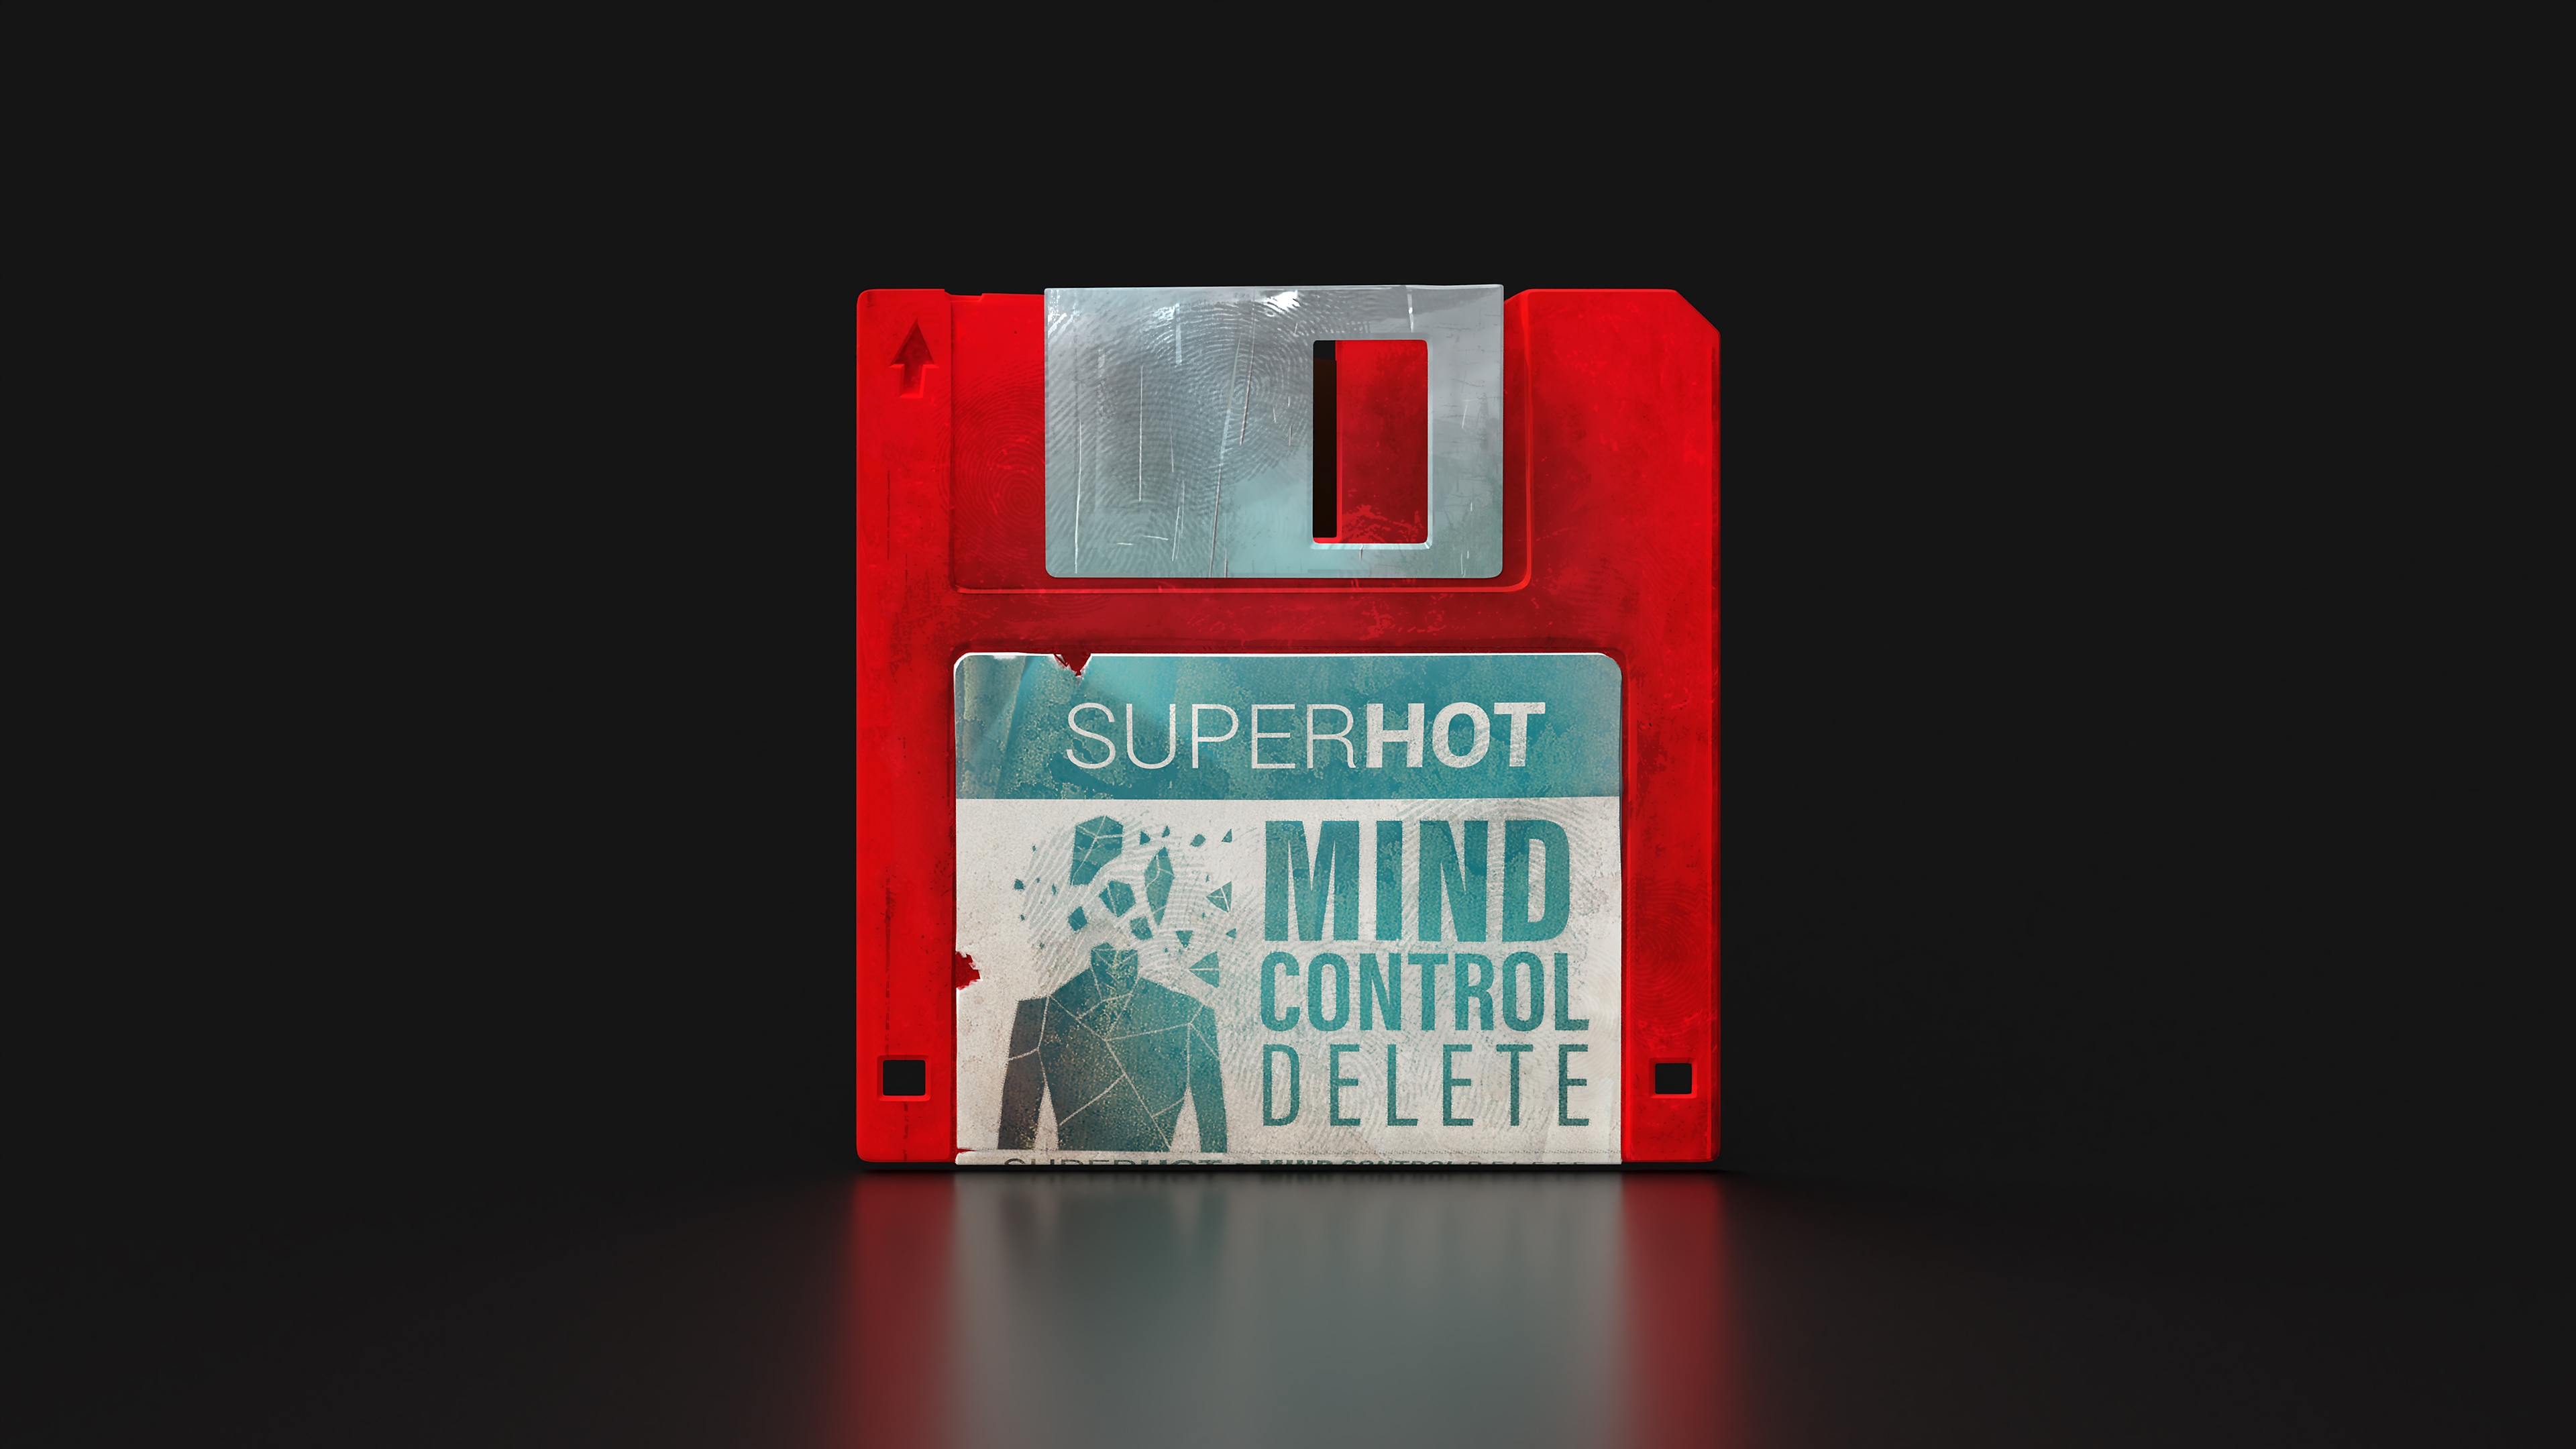 SUPERHOT: MIND CONTROL DELETE десктоп